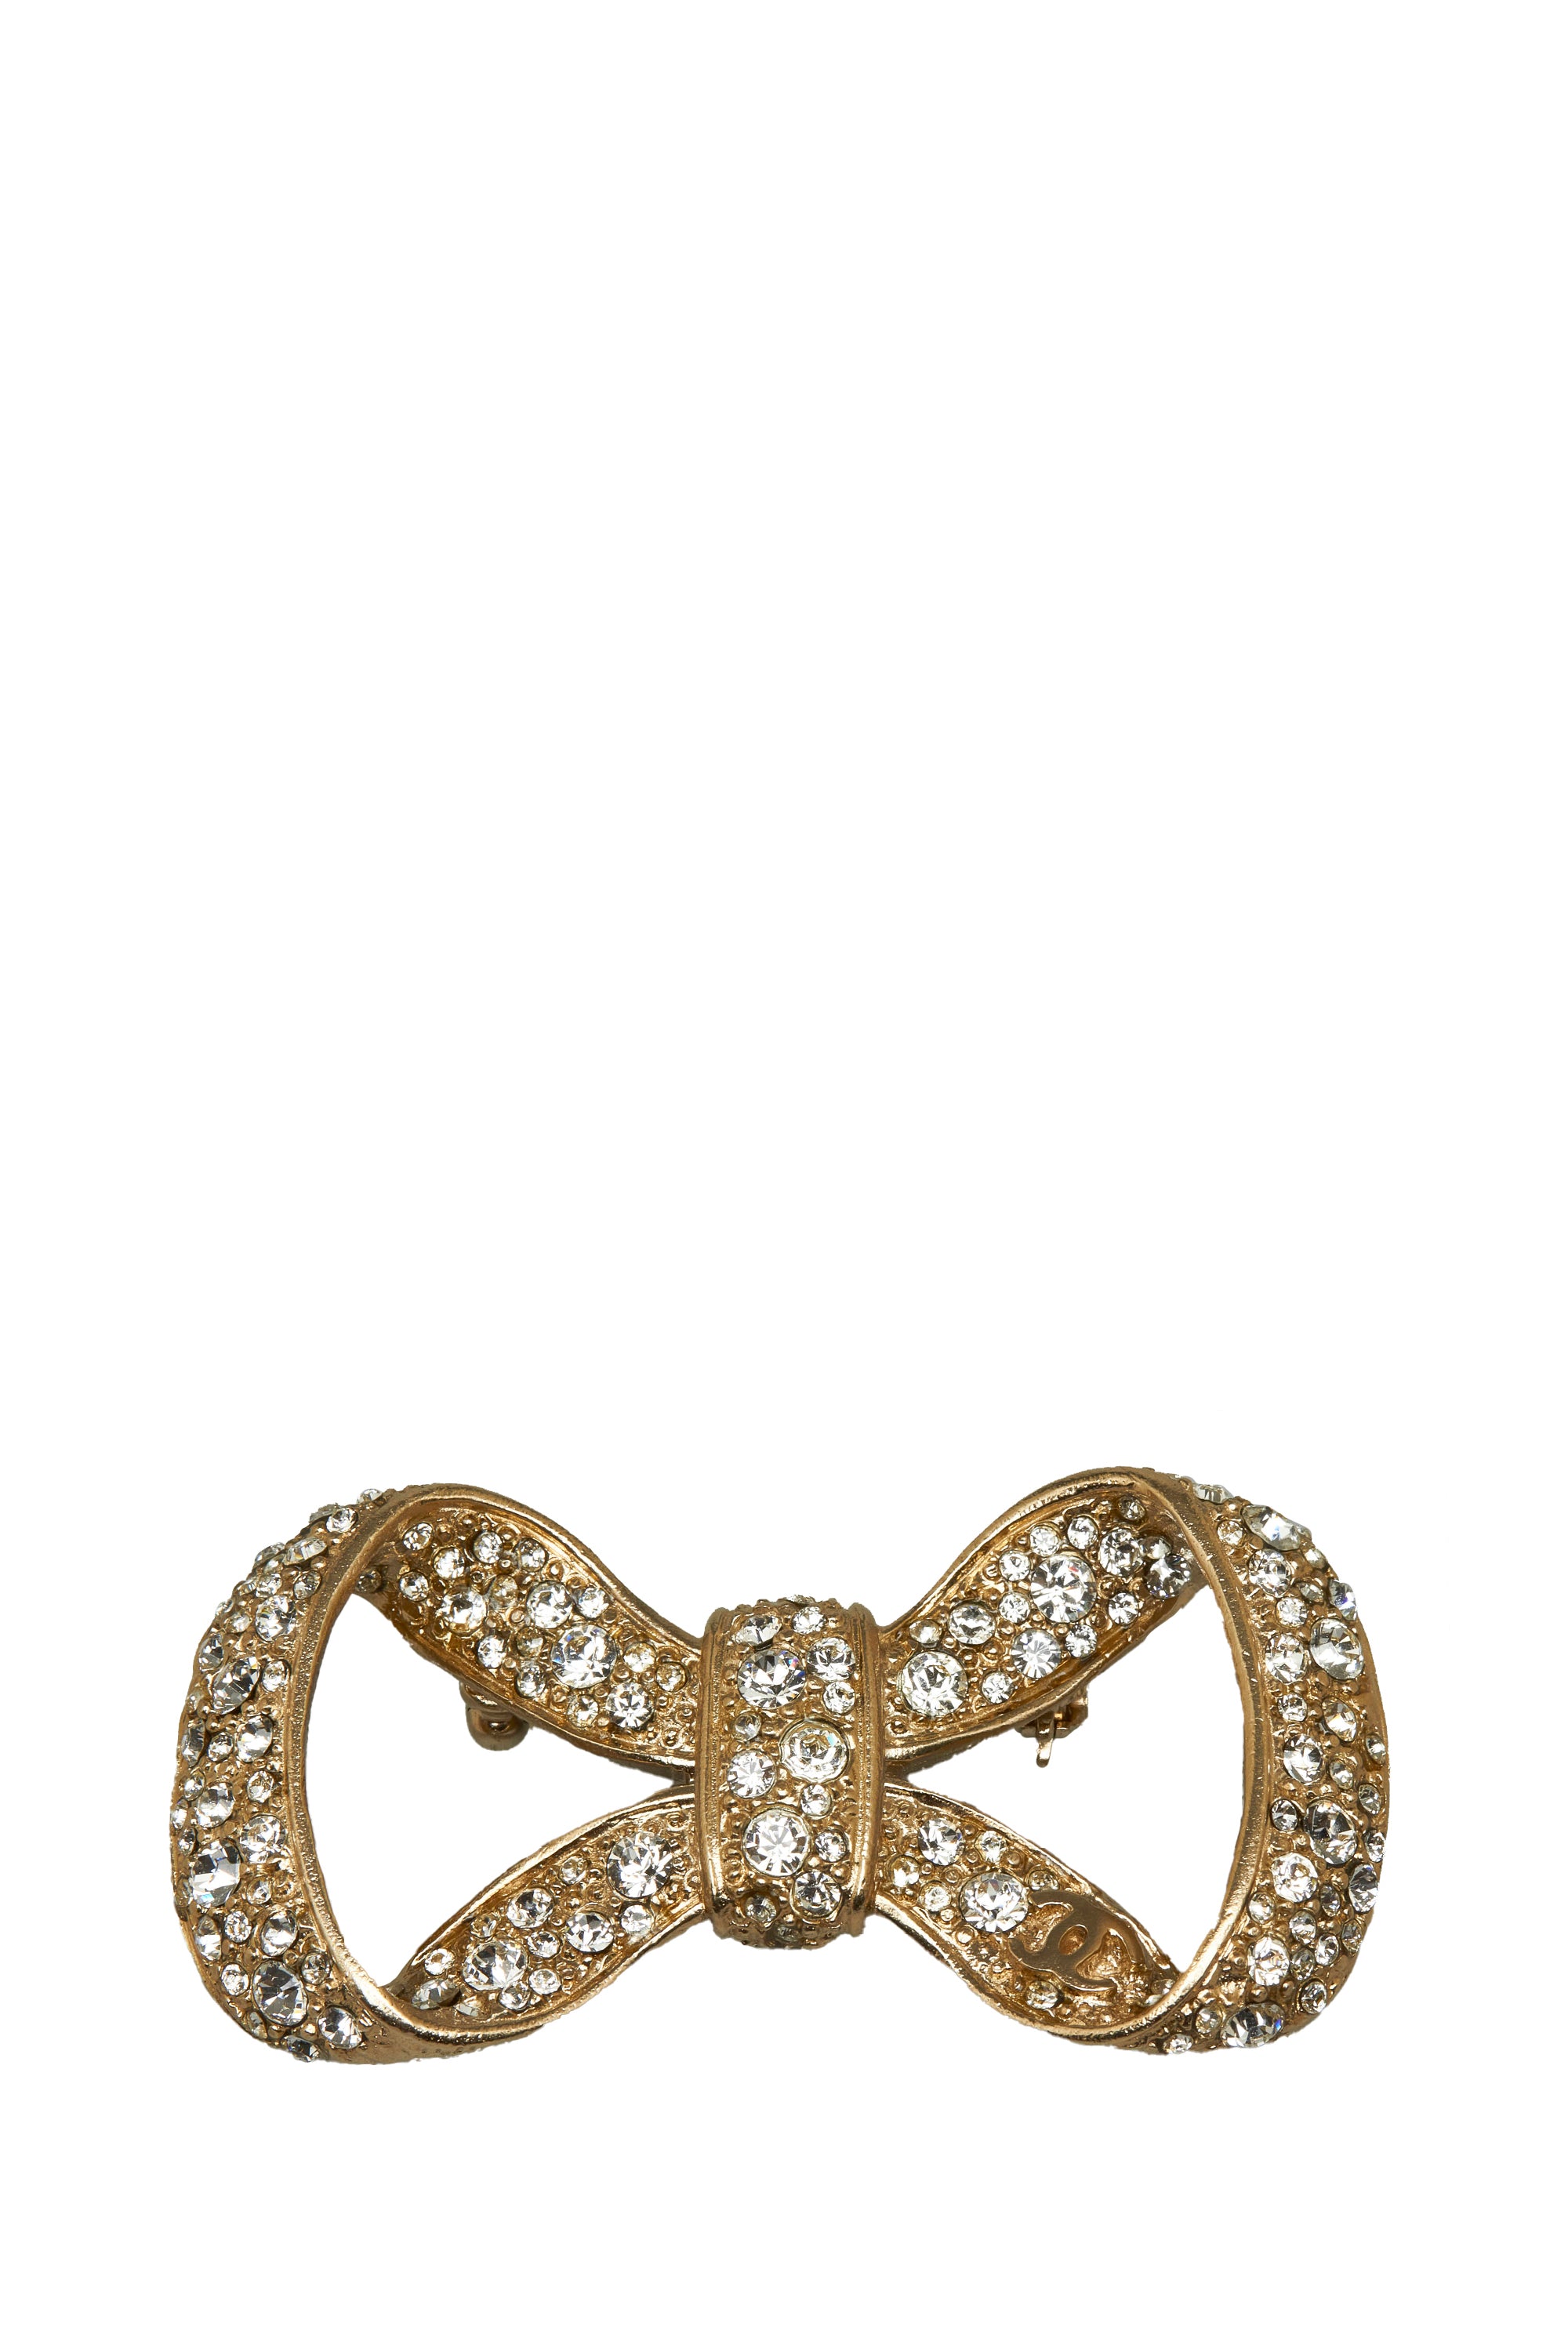 Silver Chanel Crystal Bow Brooch - Designer Revival